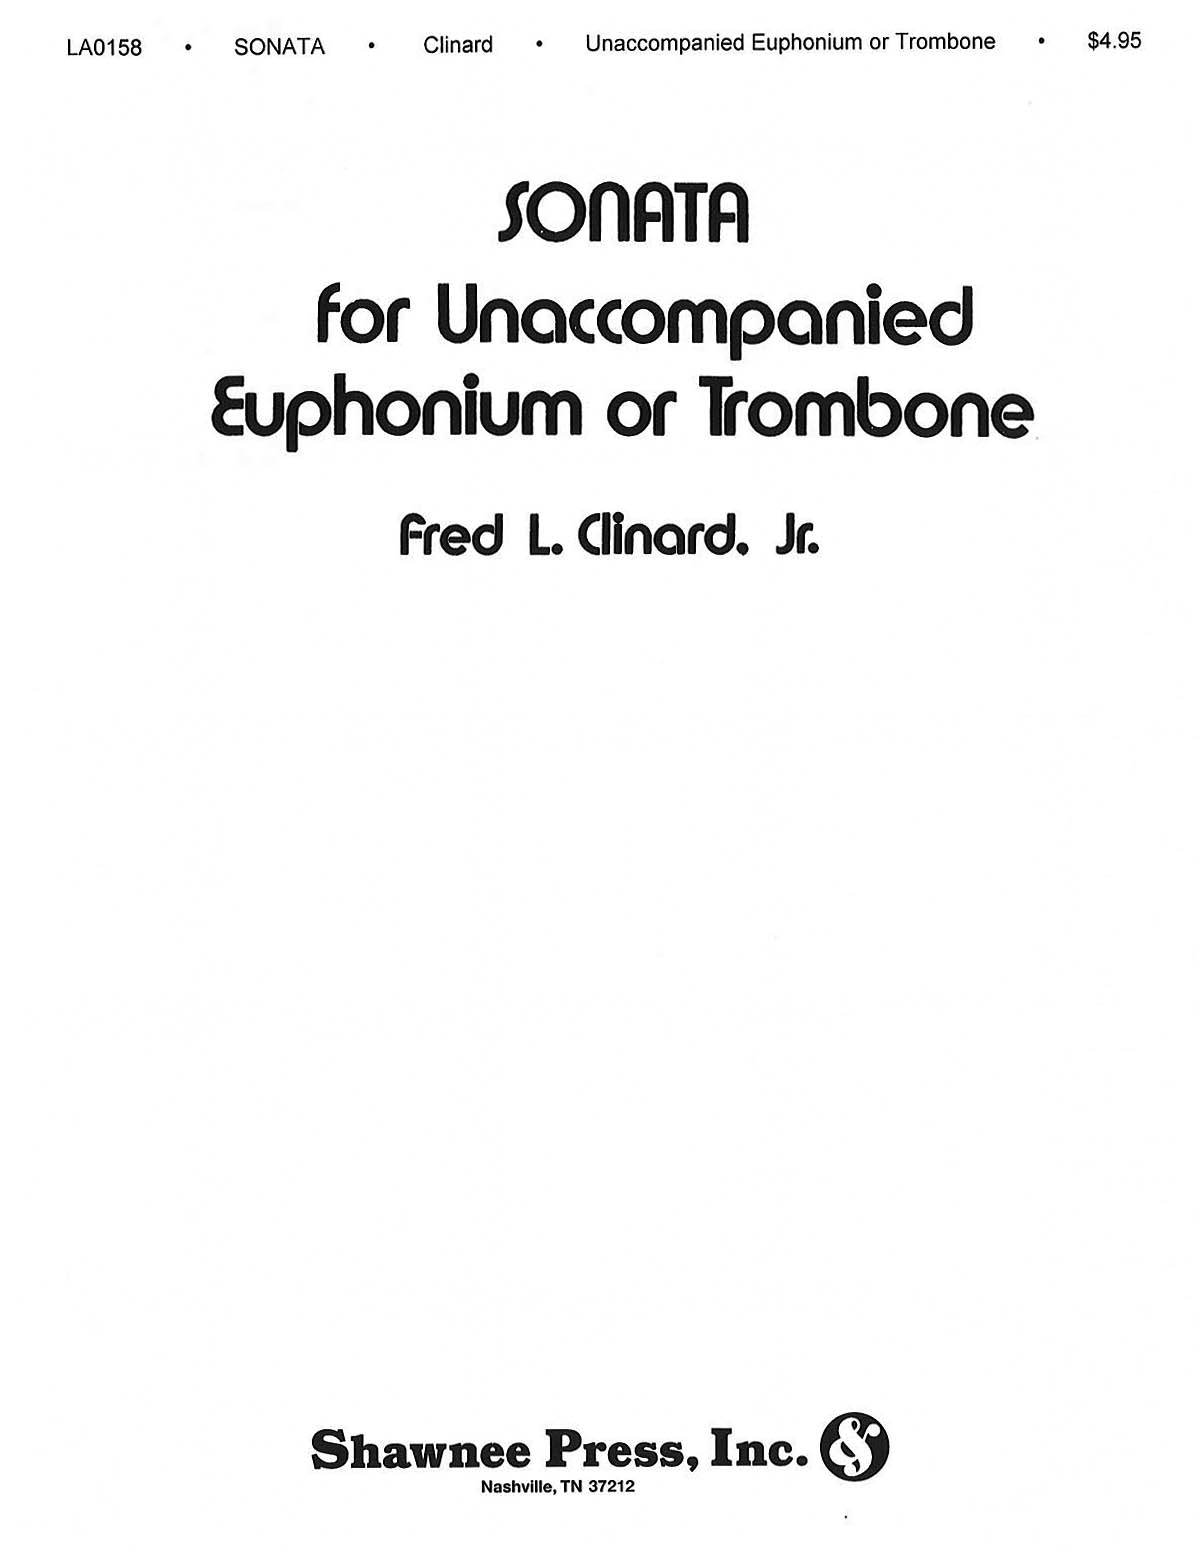 Fred Clinard: Sonata For Unaccompanied Euphonium Or Trombone